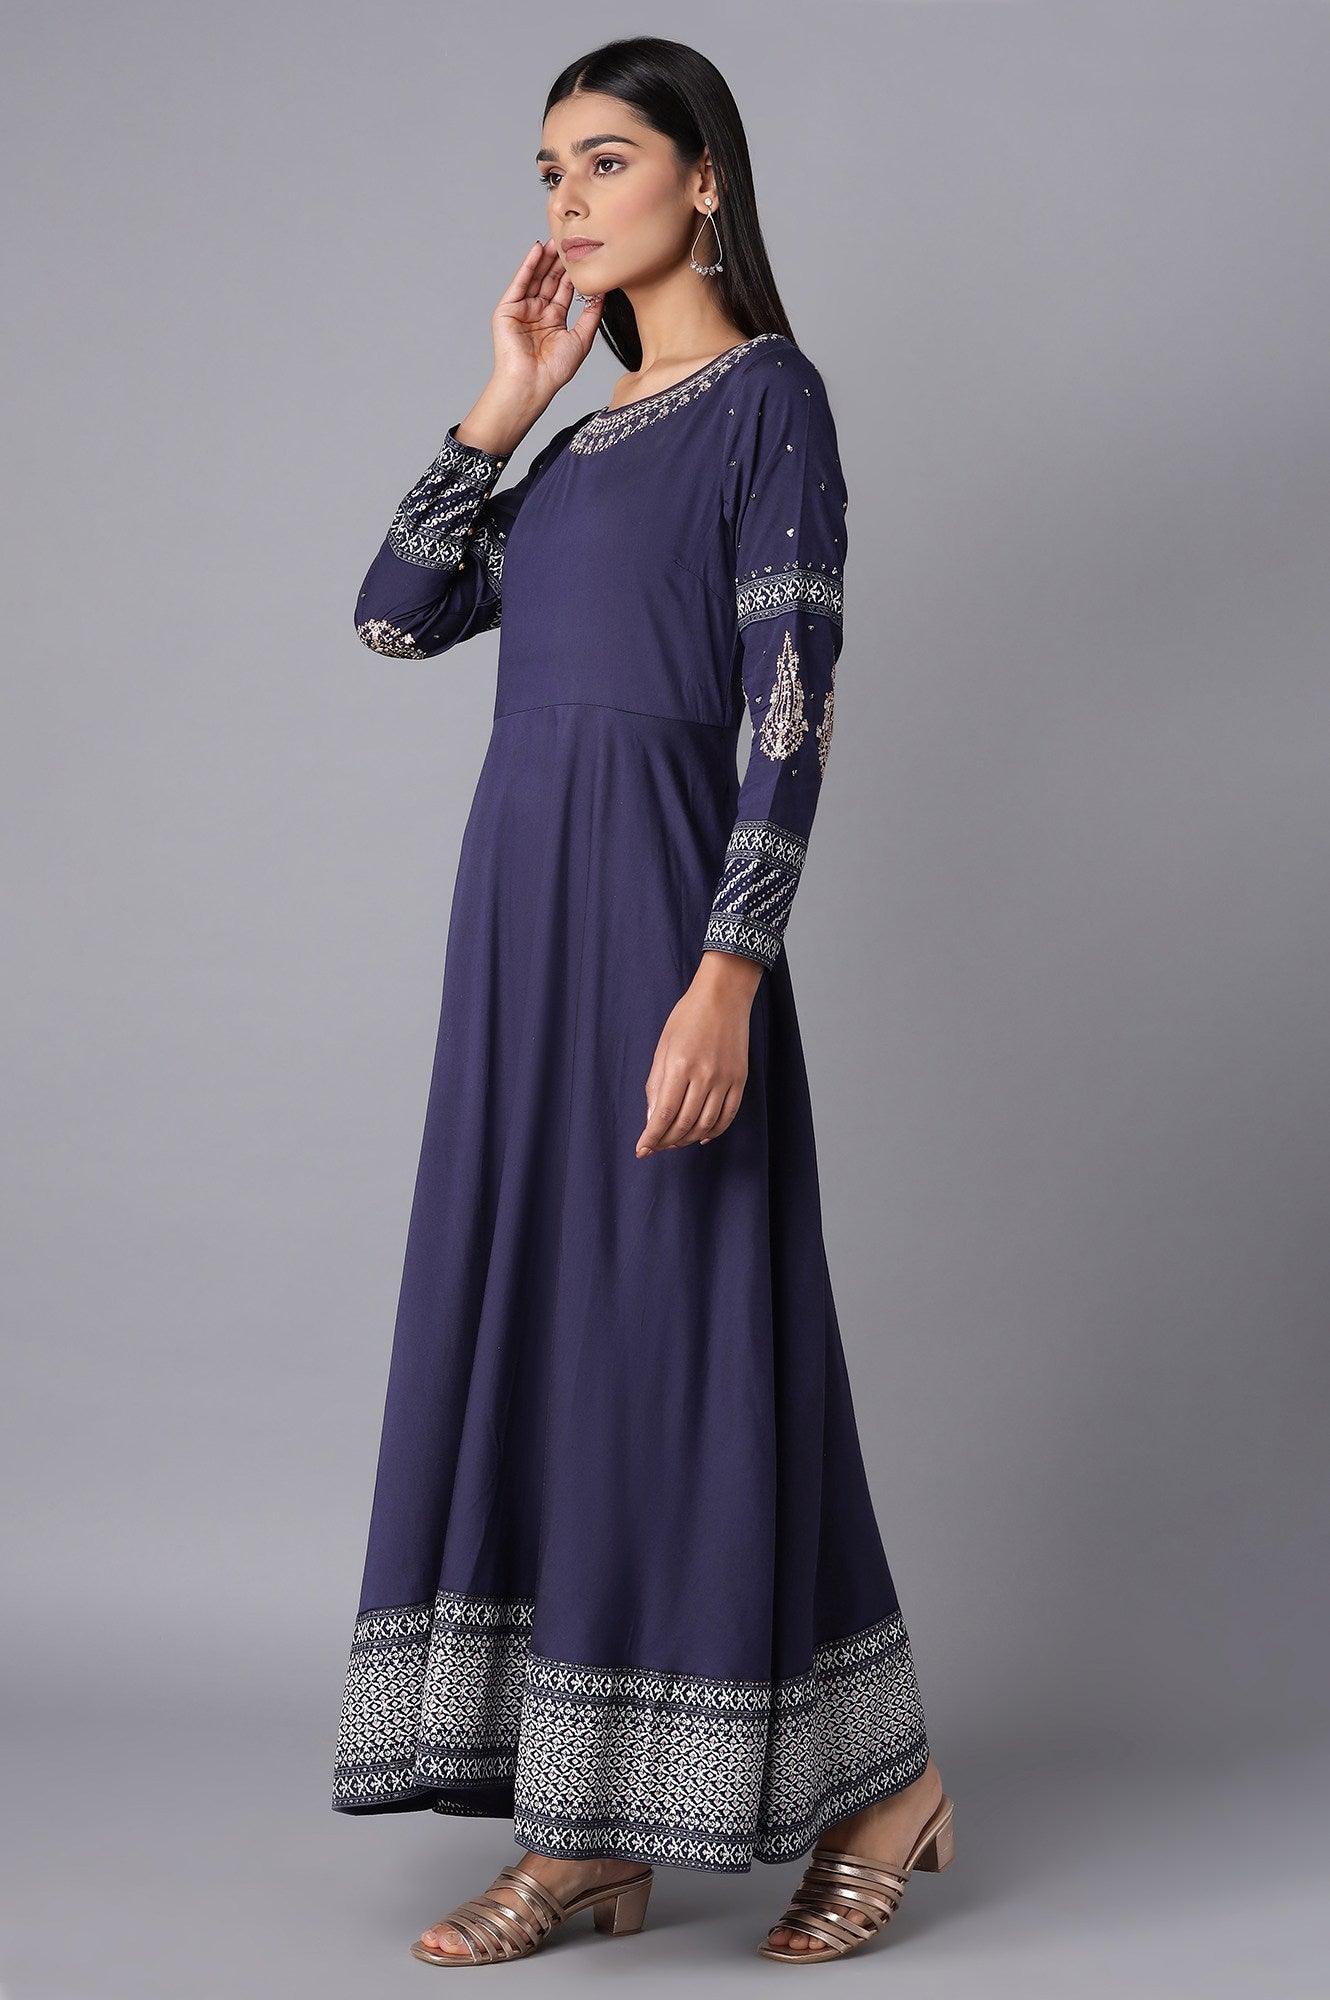 Oxford Blue Embroidered Kalidar Flared Dress - wforwoman